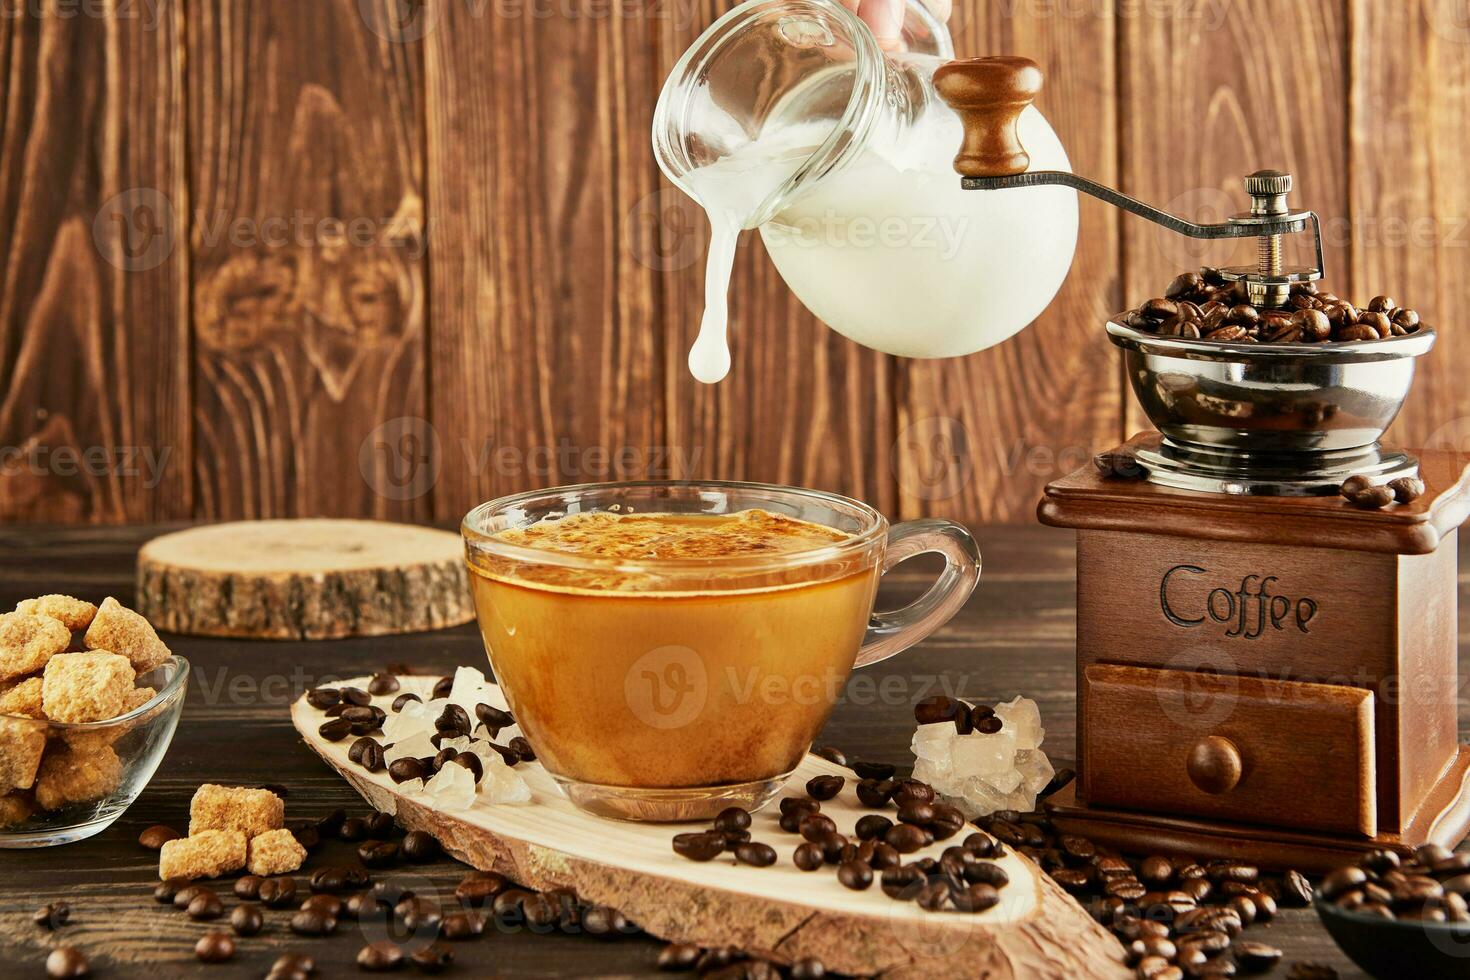 torrencial café desde vaso jarra Leche dentro vaso taza con café, Clásico café amoladora y terrón azúcar en de madera antecedentes foto